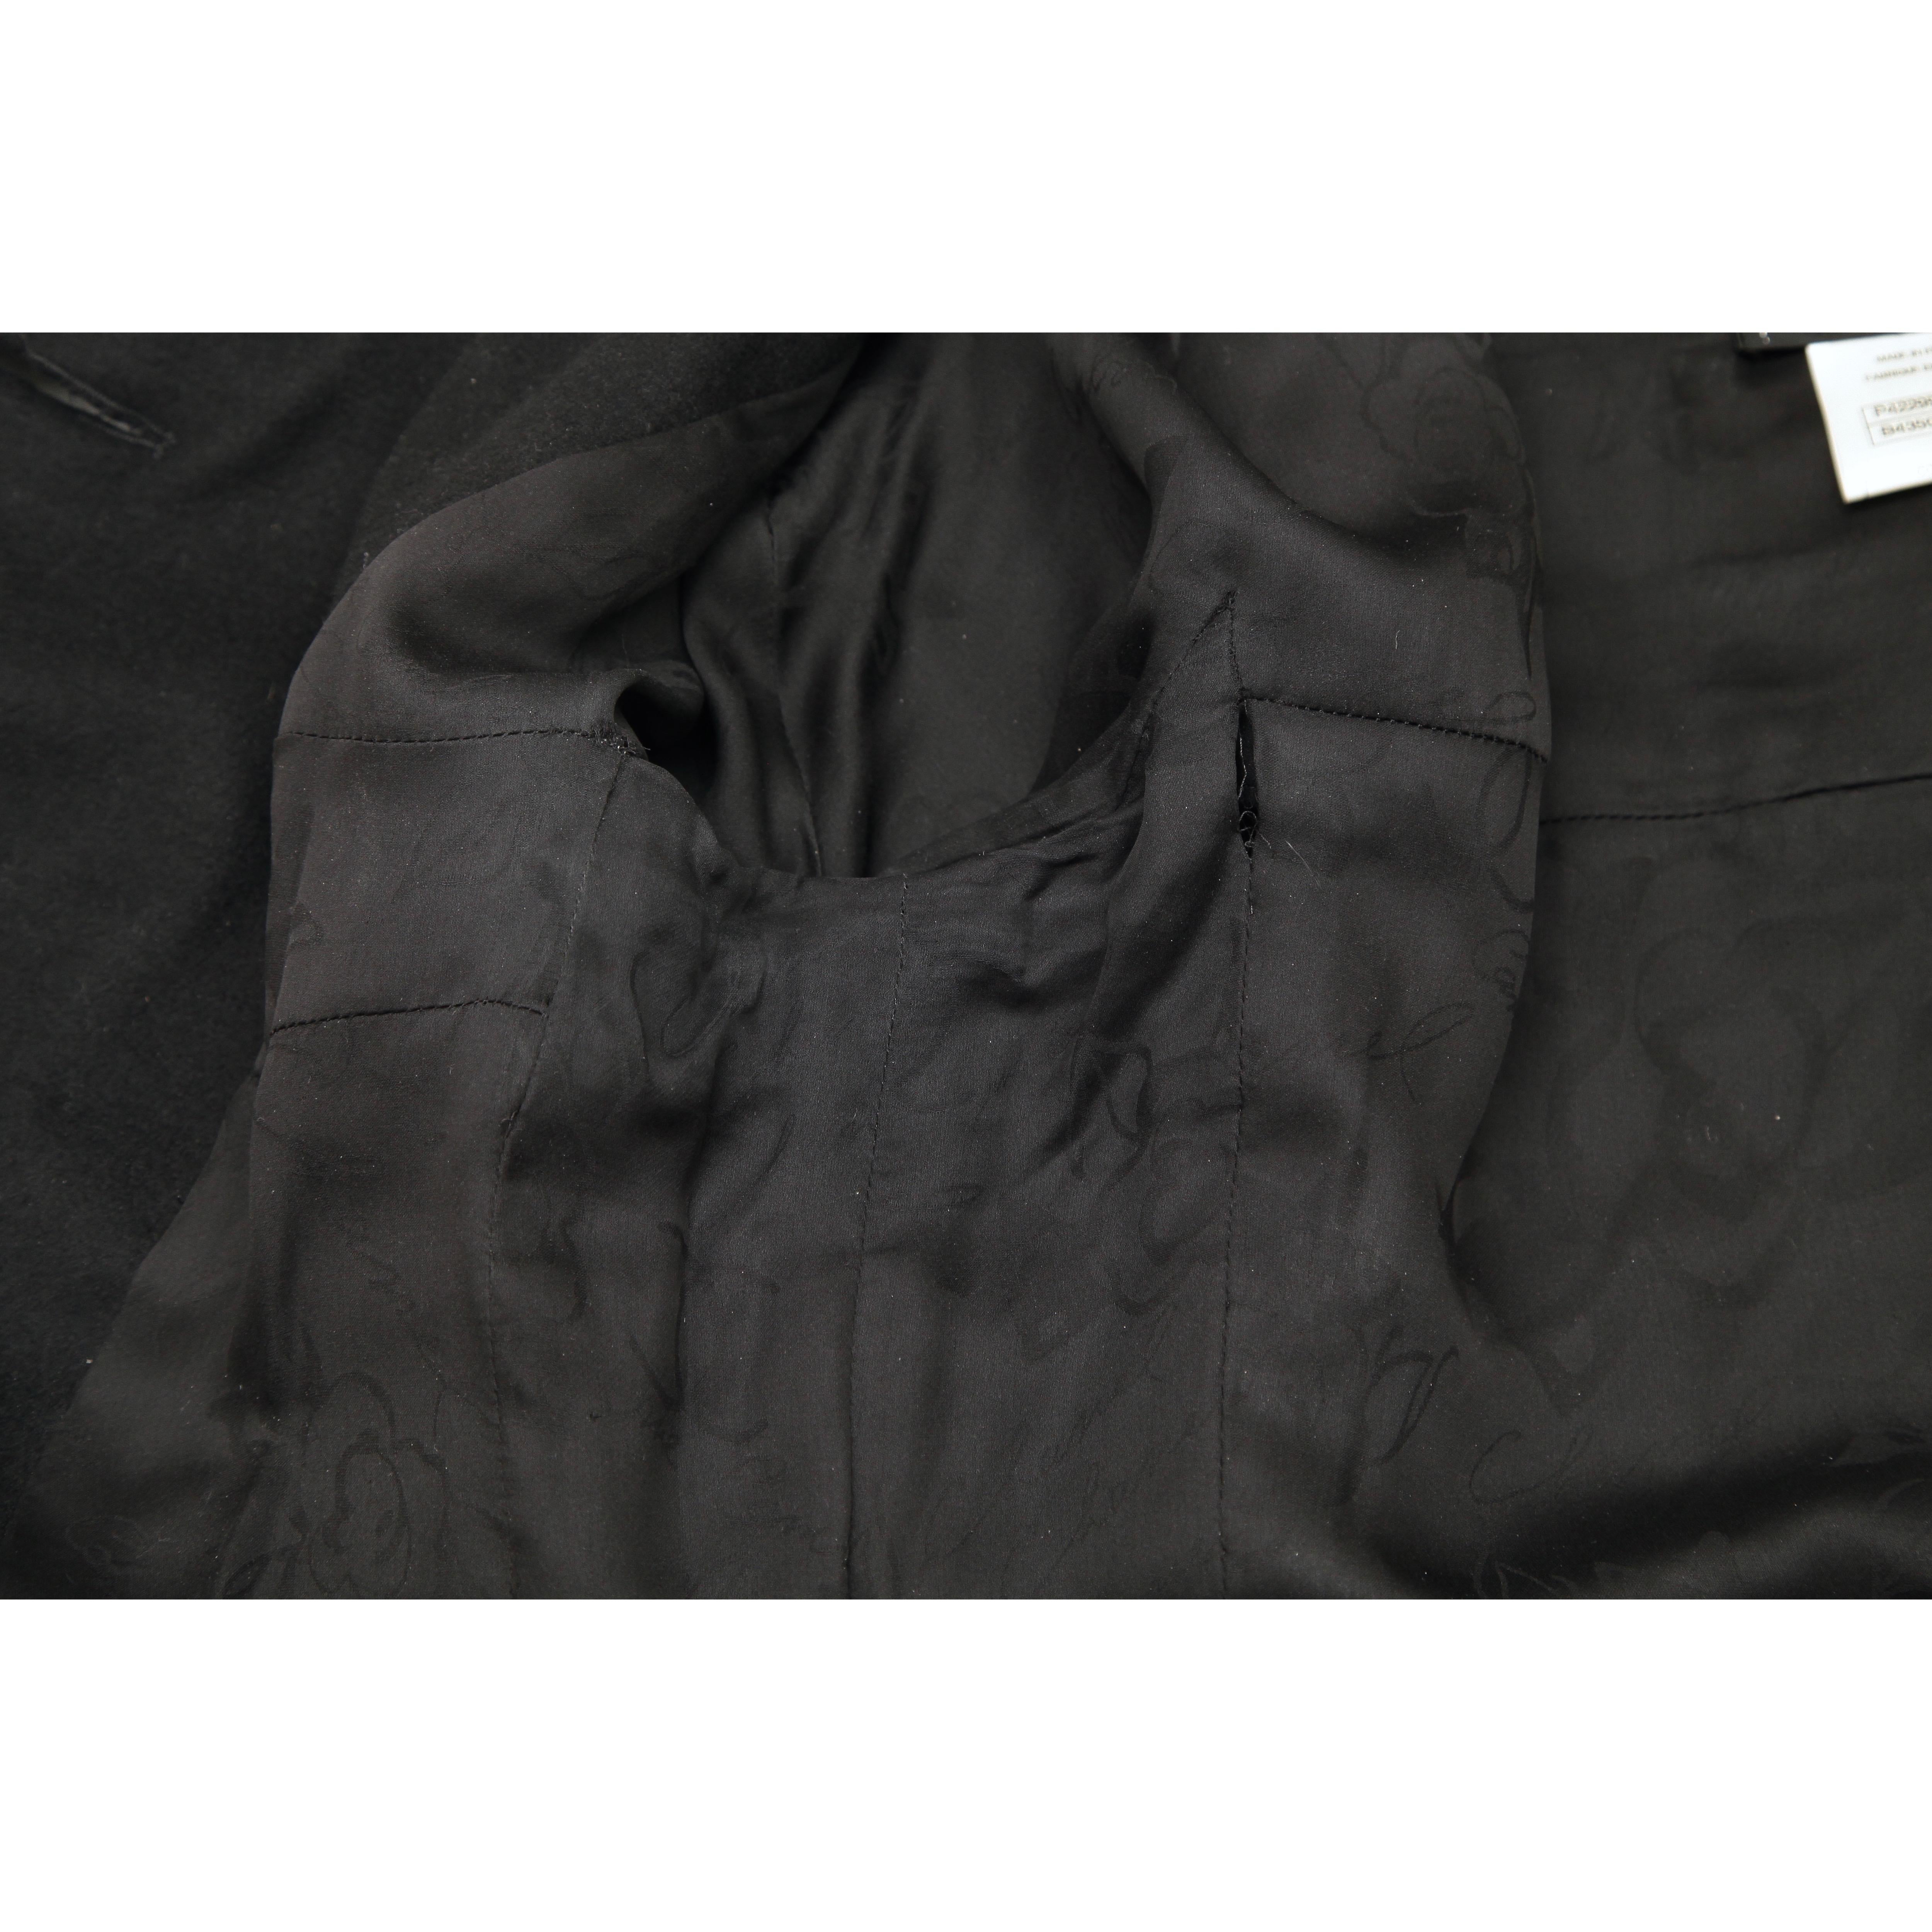 CHANEL Tweed Black Jacket Blazer Buttons Long Sleeve Pockets Sz 40 2011 11A 5